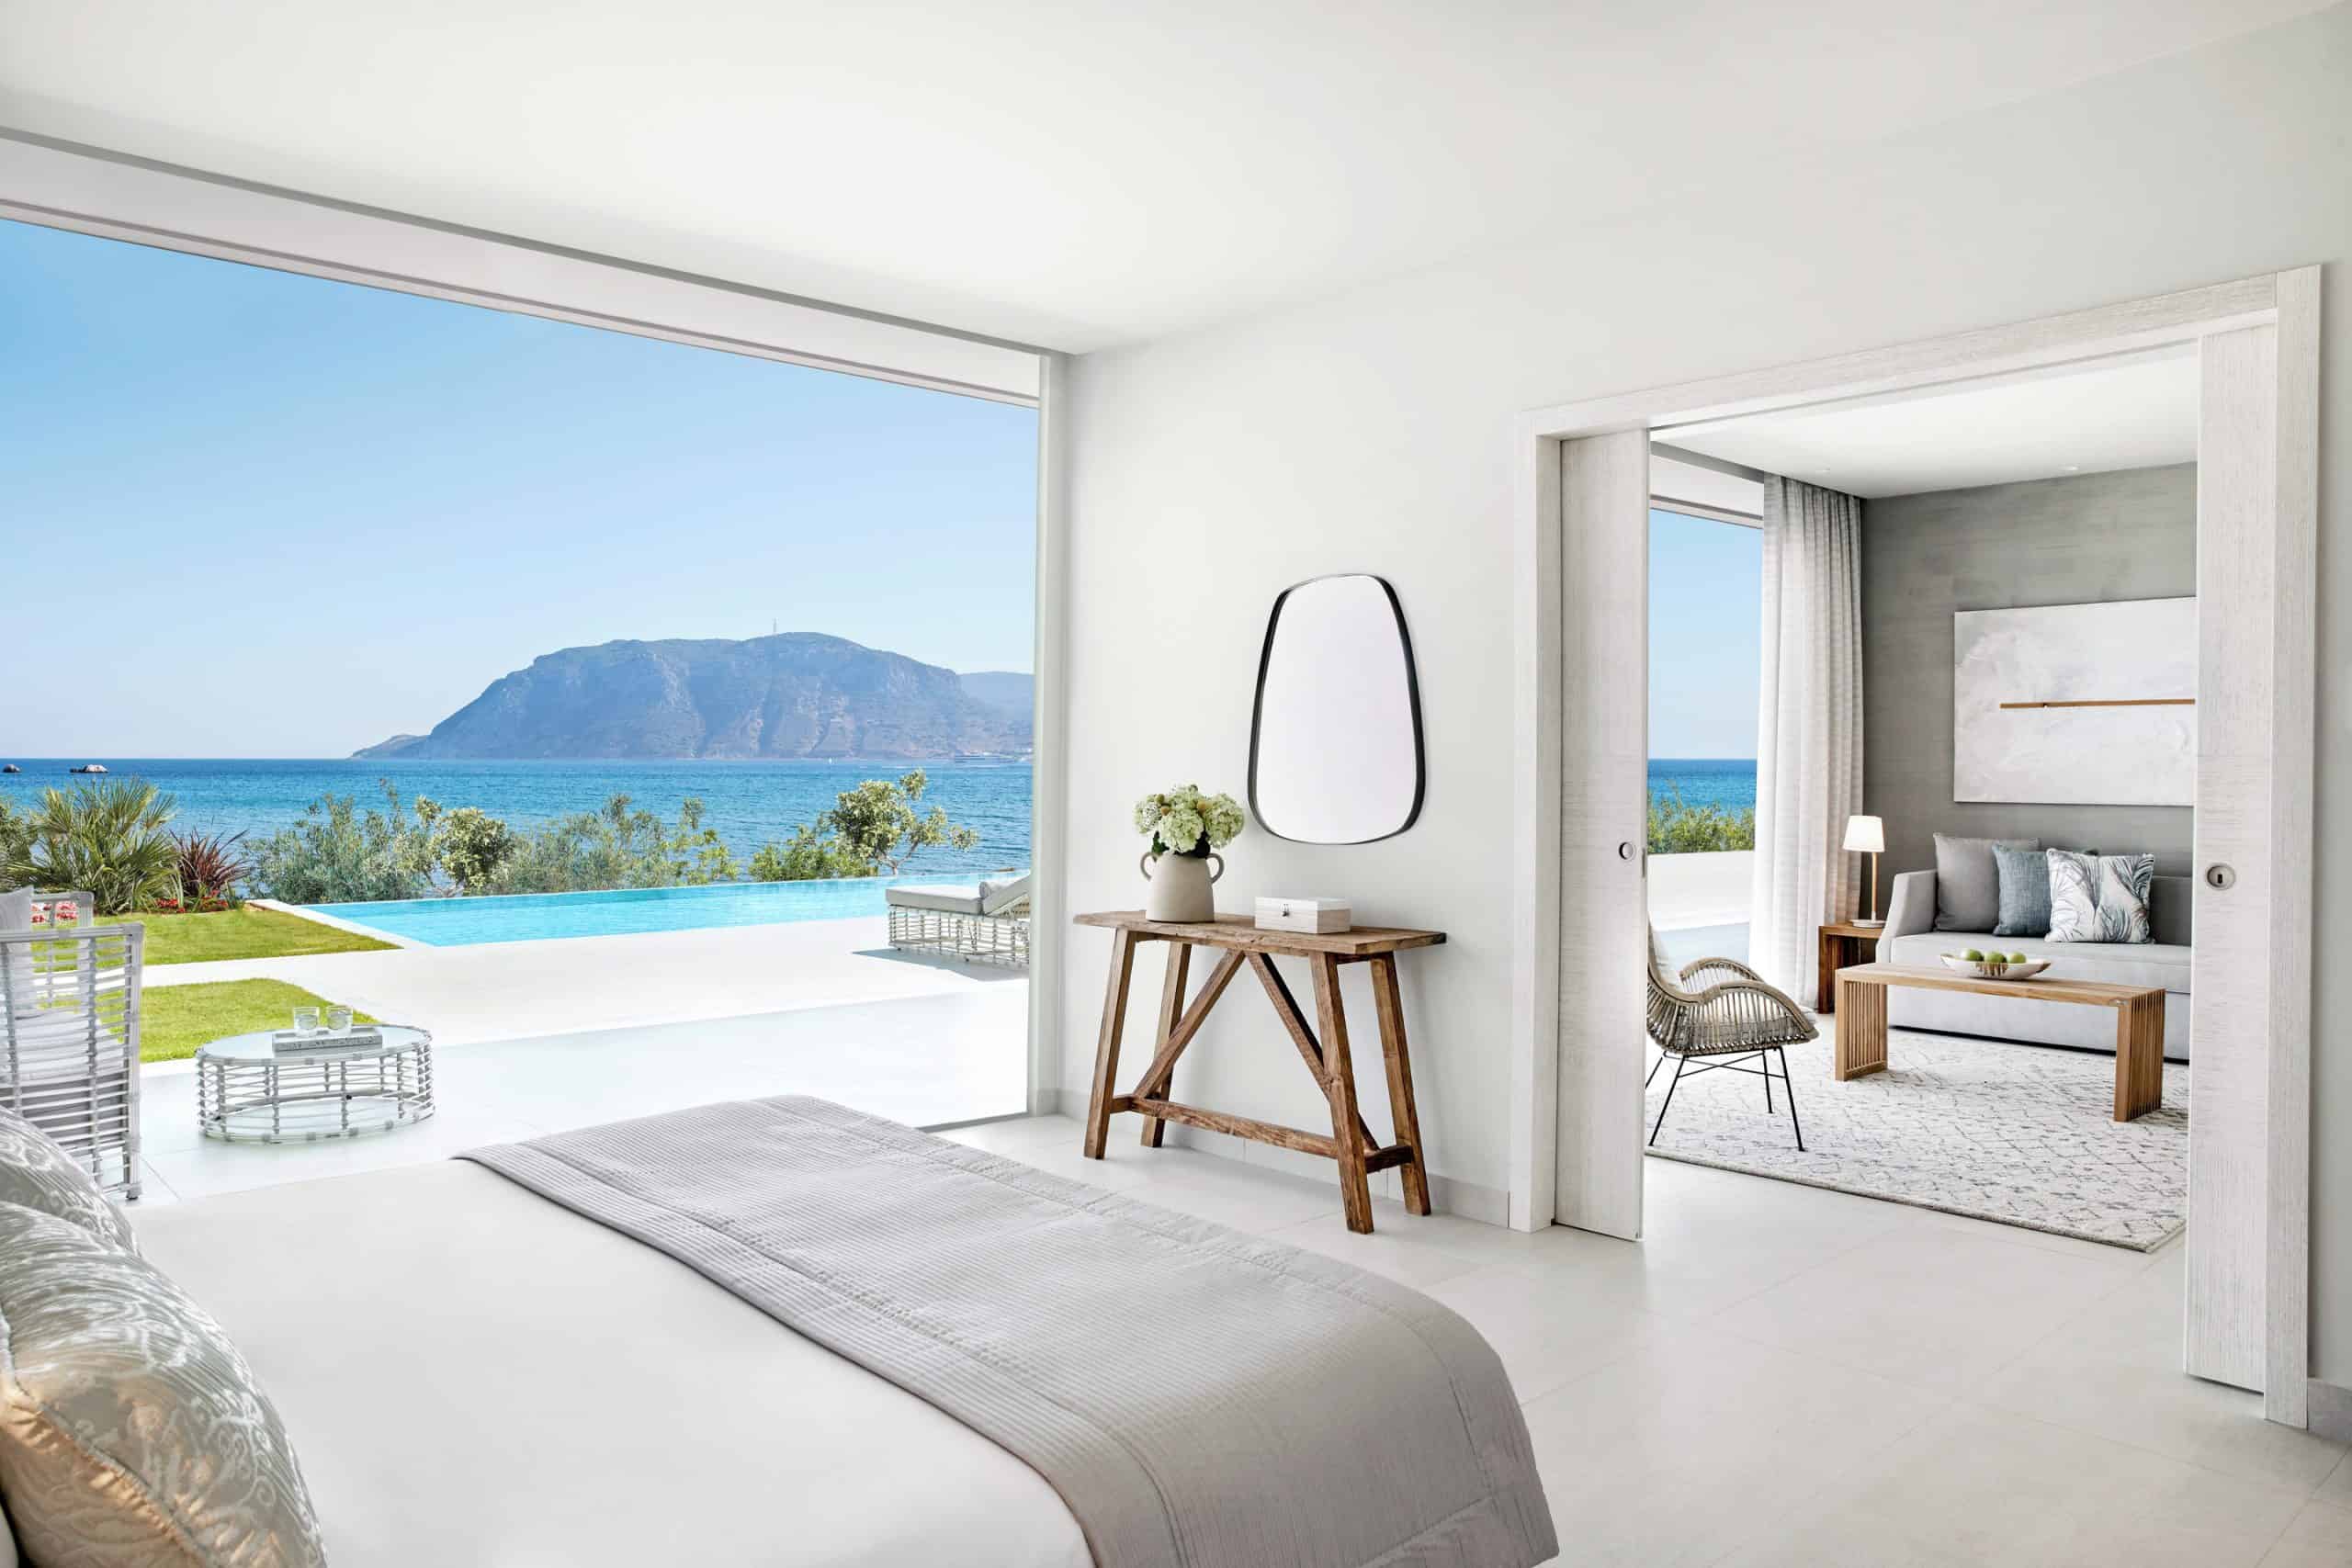 Ikos Resorts - luxury hotels in Greece and Spain